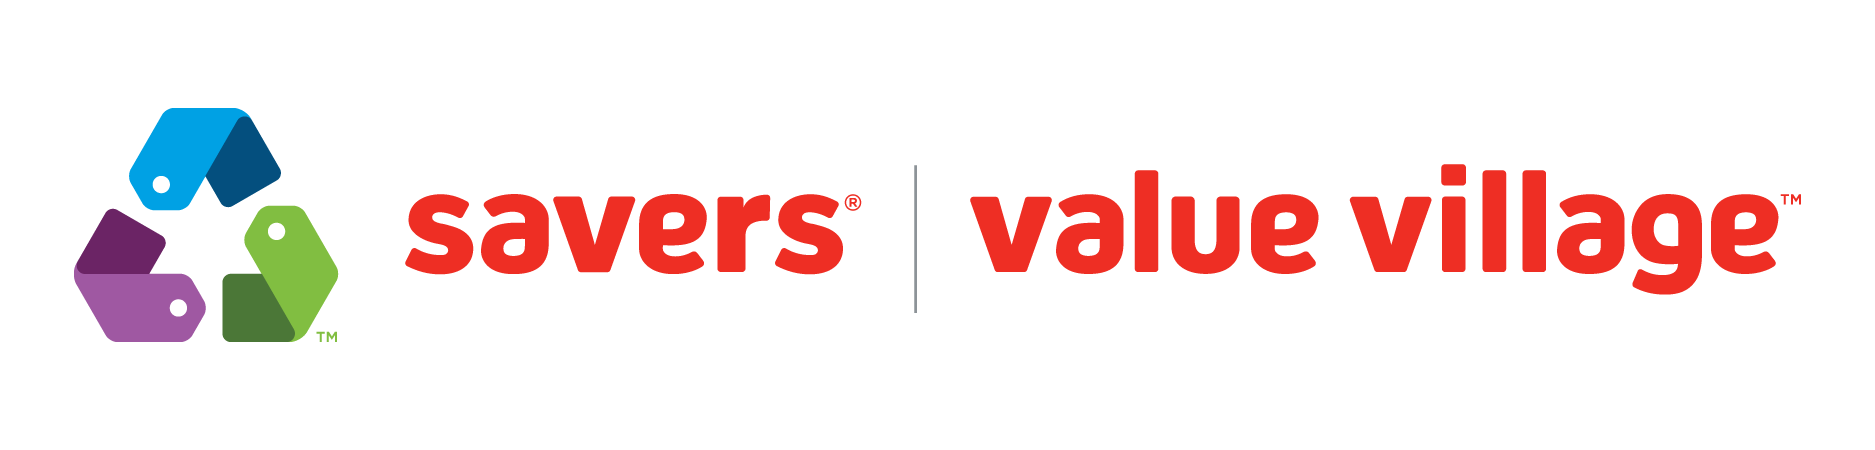 Savers and Value Village logo